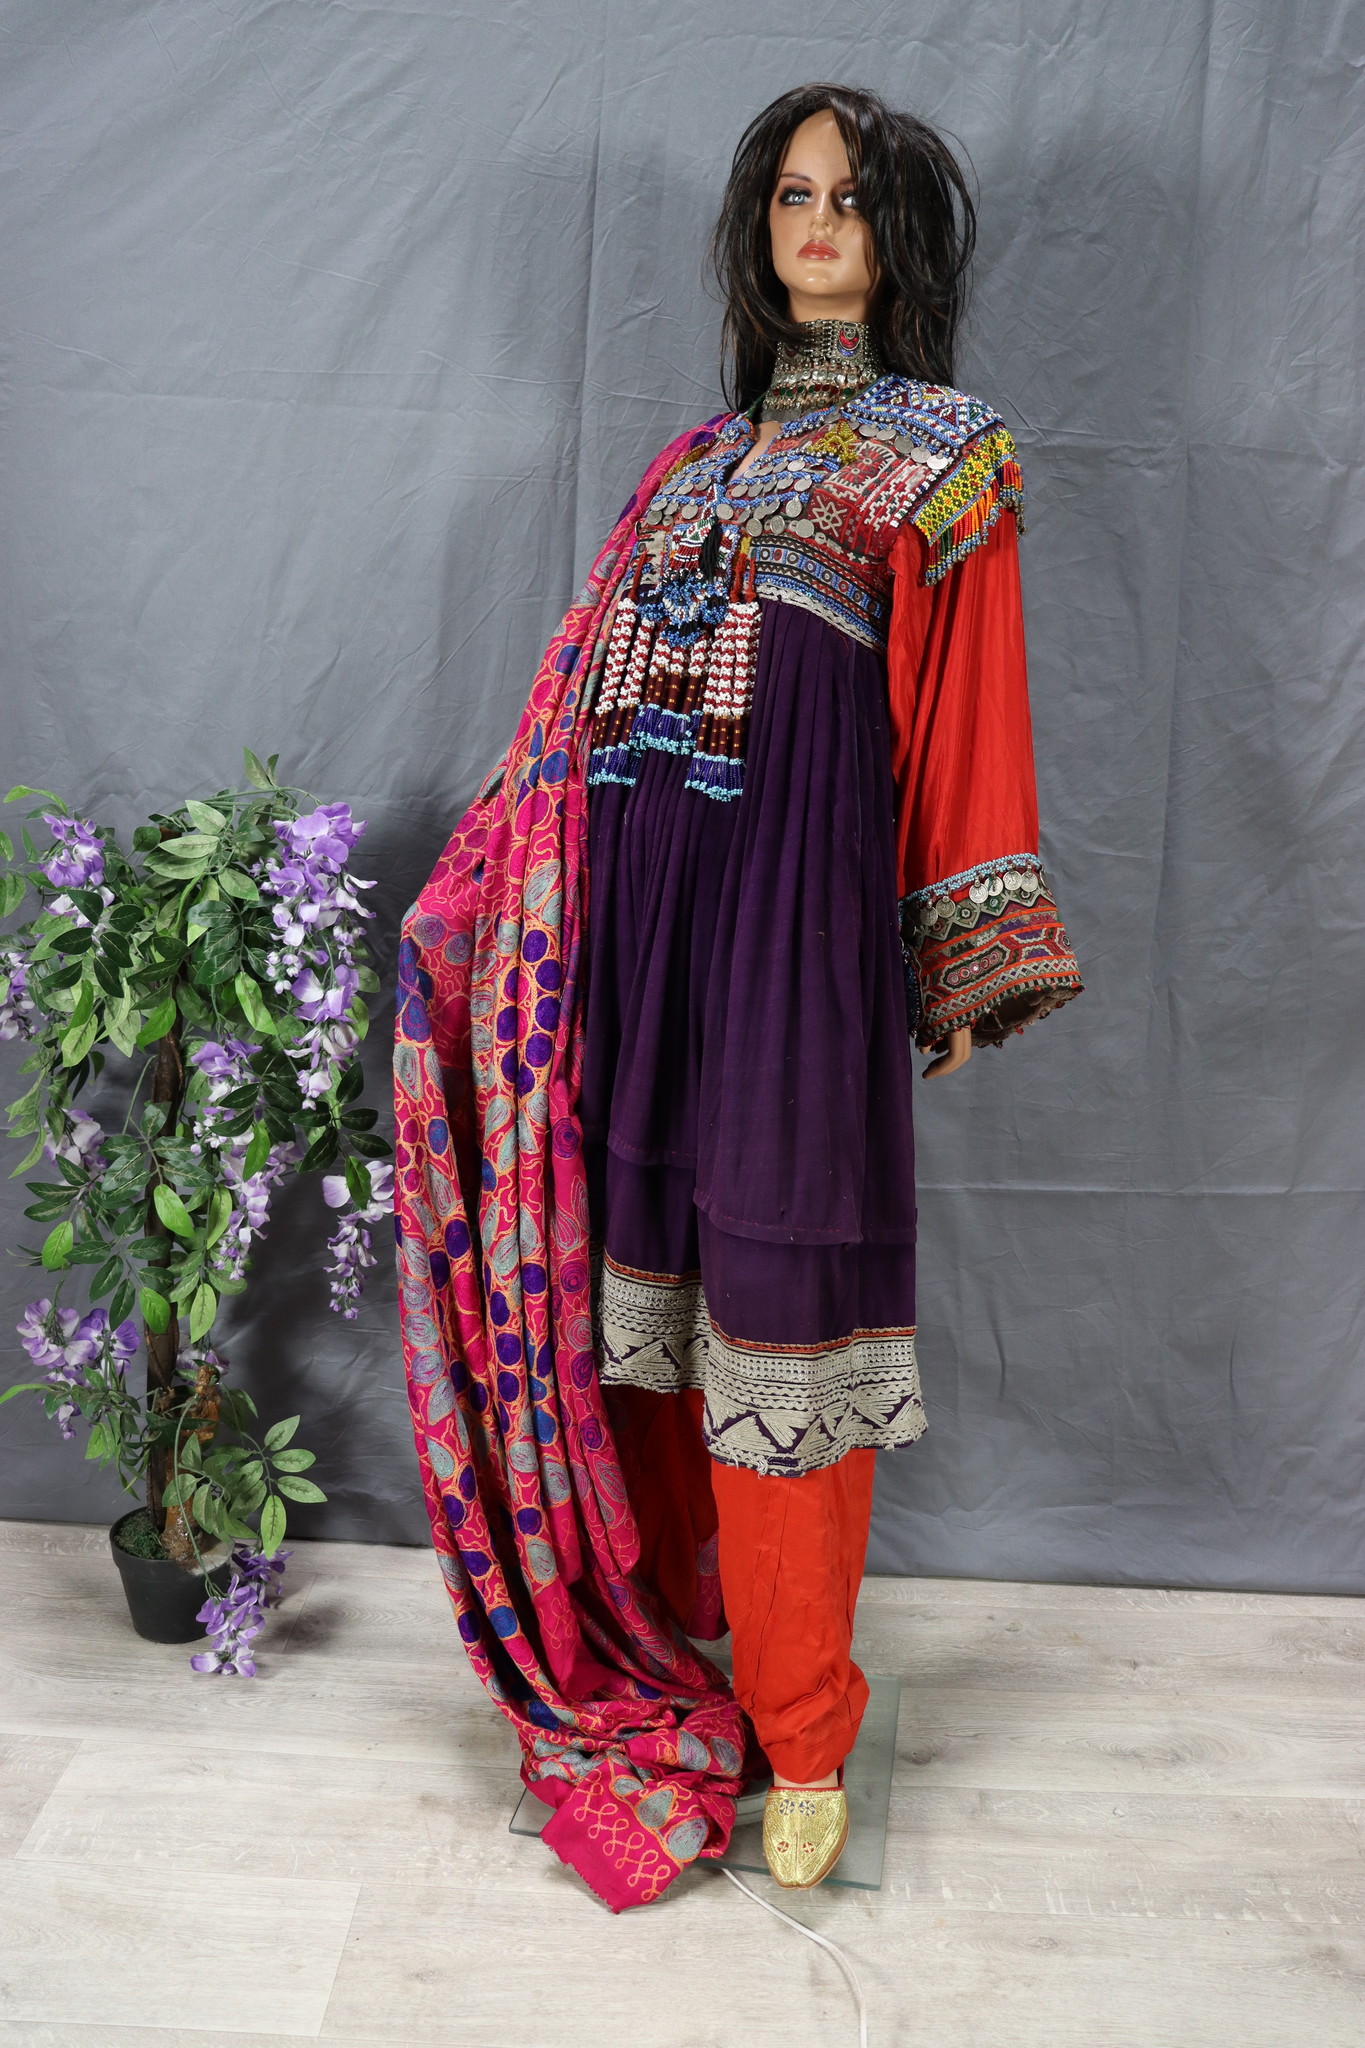 3 teilig antik Orient Nomaden kuchi frauen Tracht afghan kleid afghanistan hand bestickte kostüm Nr-B